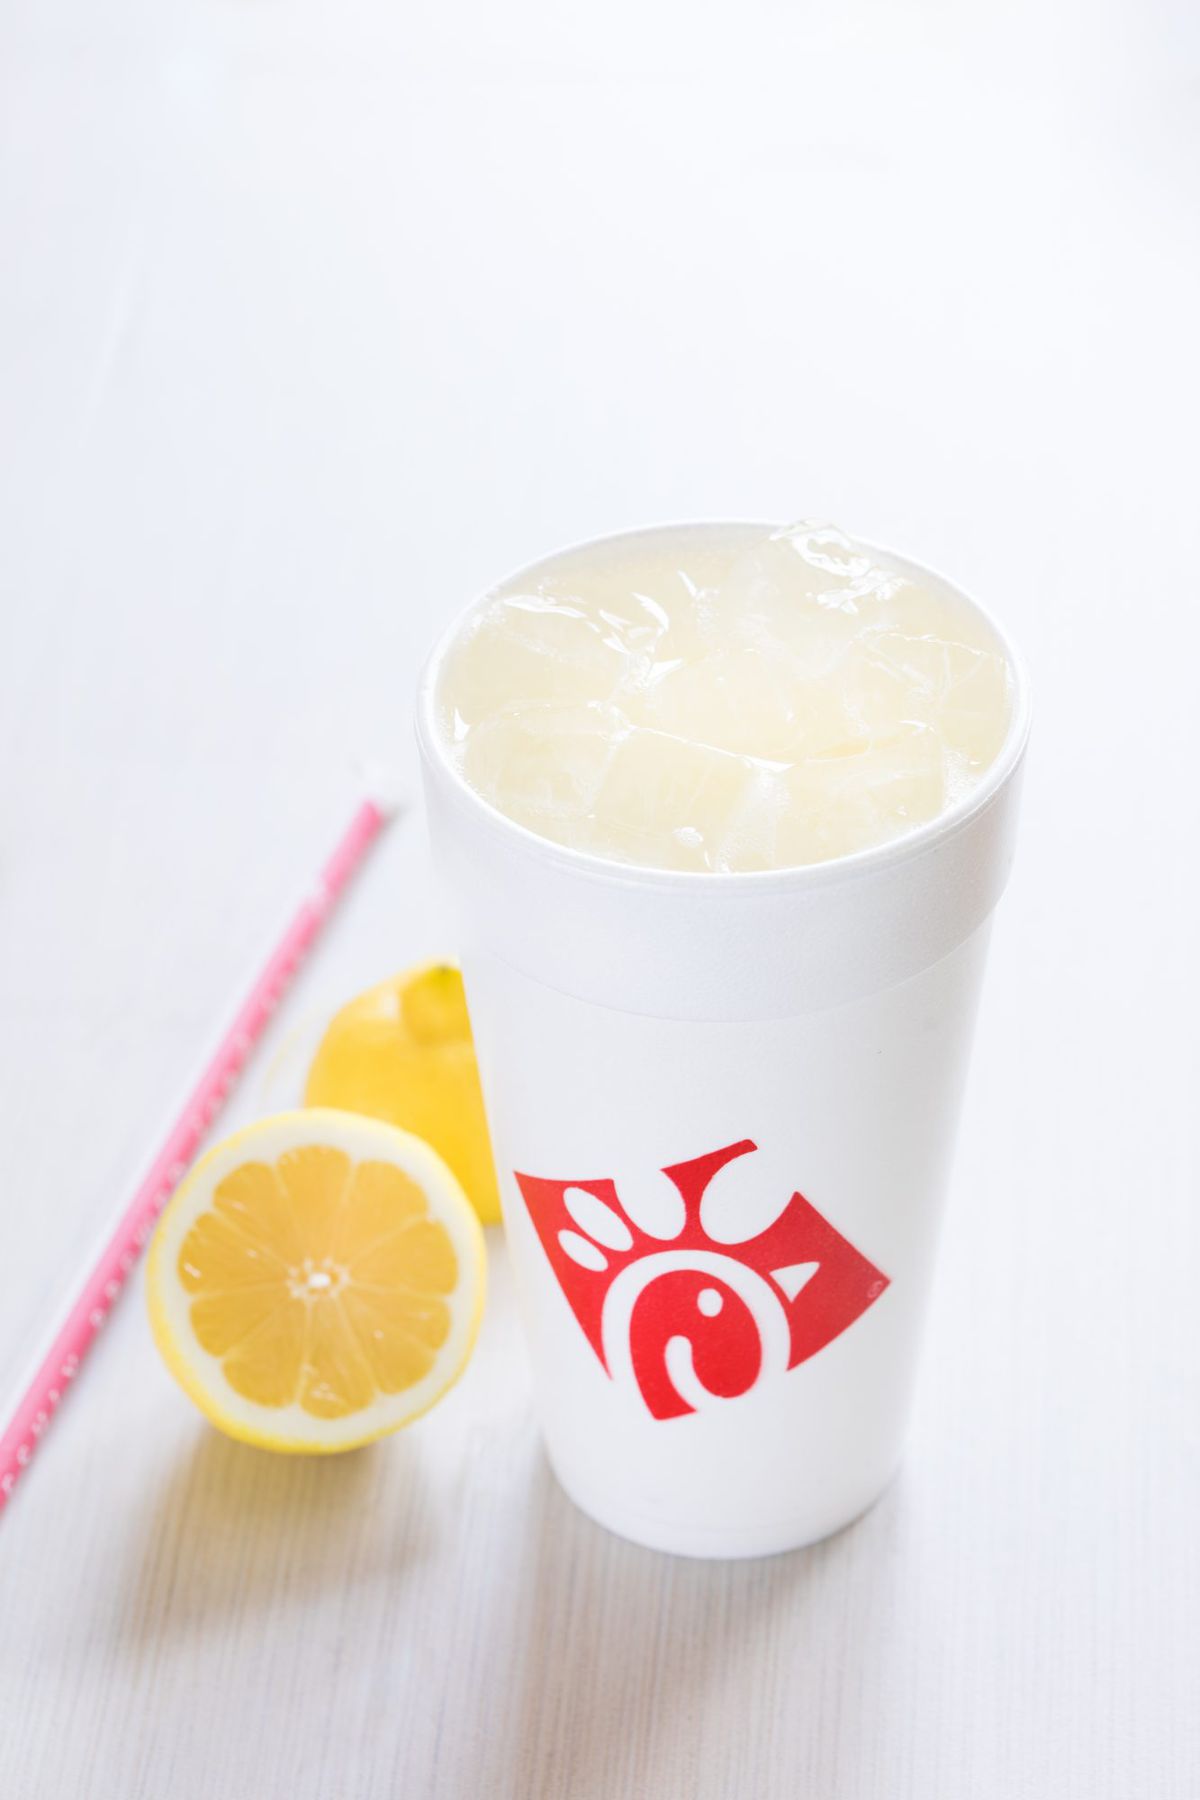 Chick-fil-a Lemonade